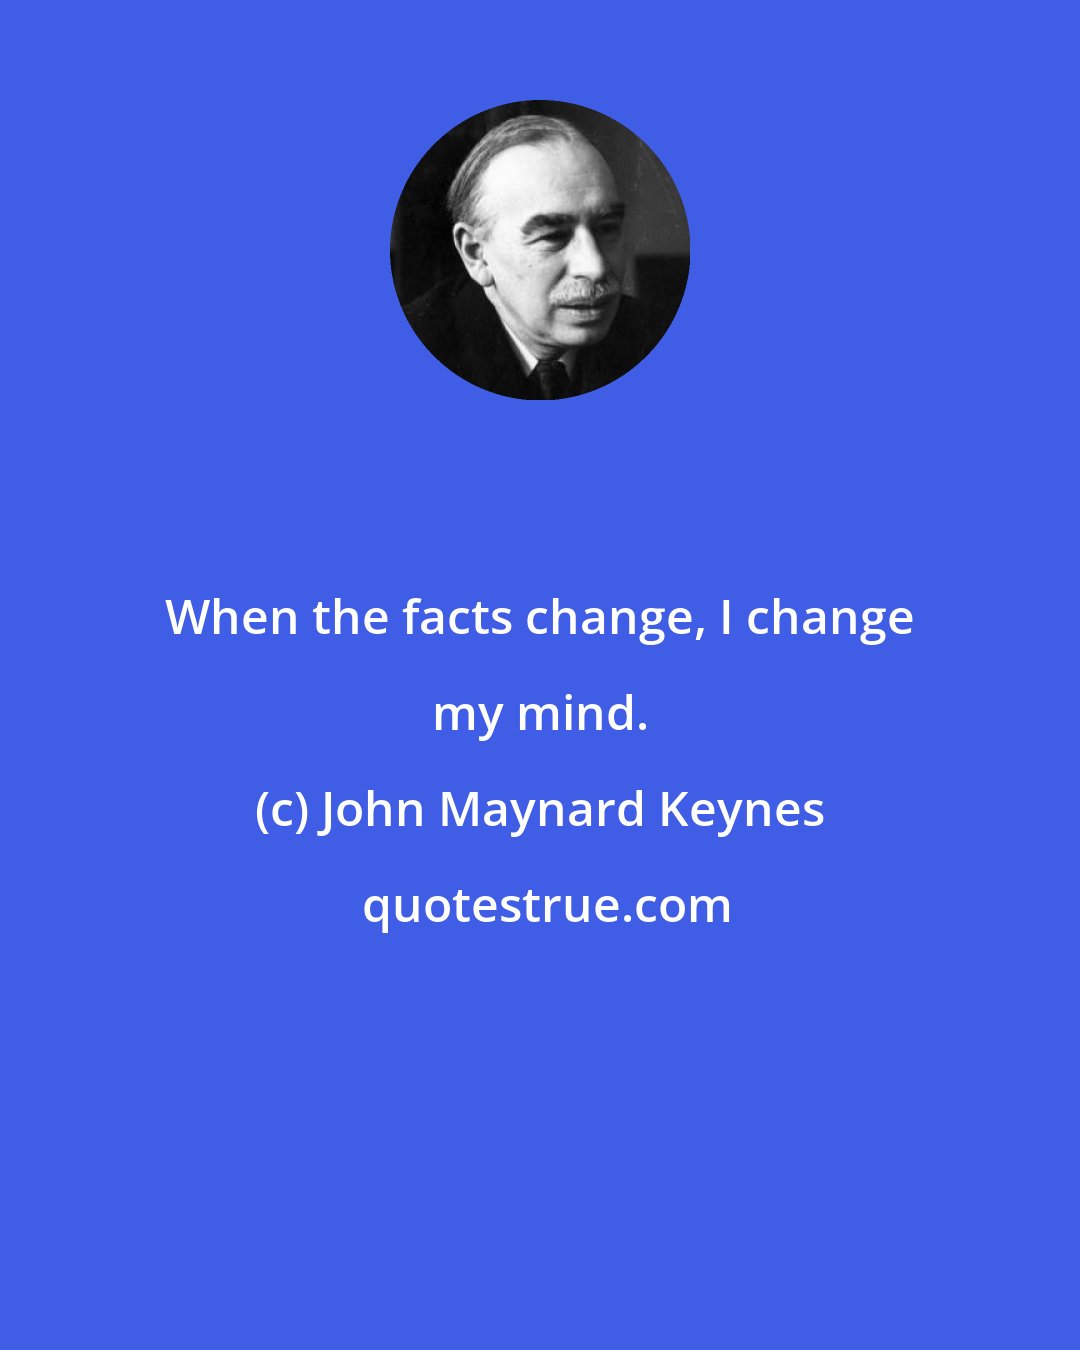 John Maynard Keynes: When the facts change, I change my mind.